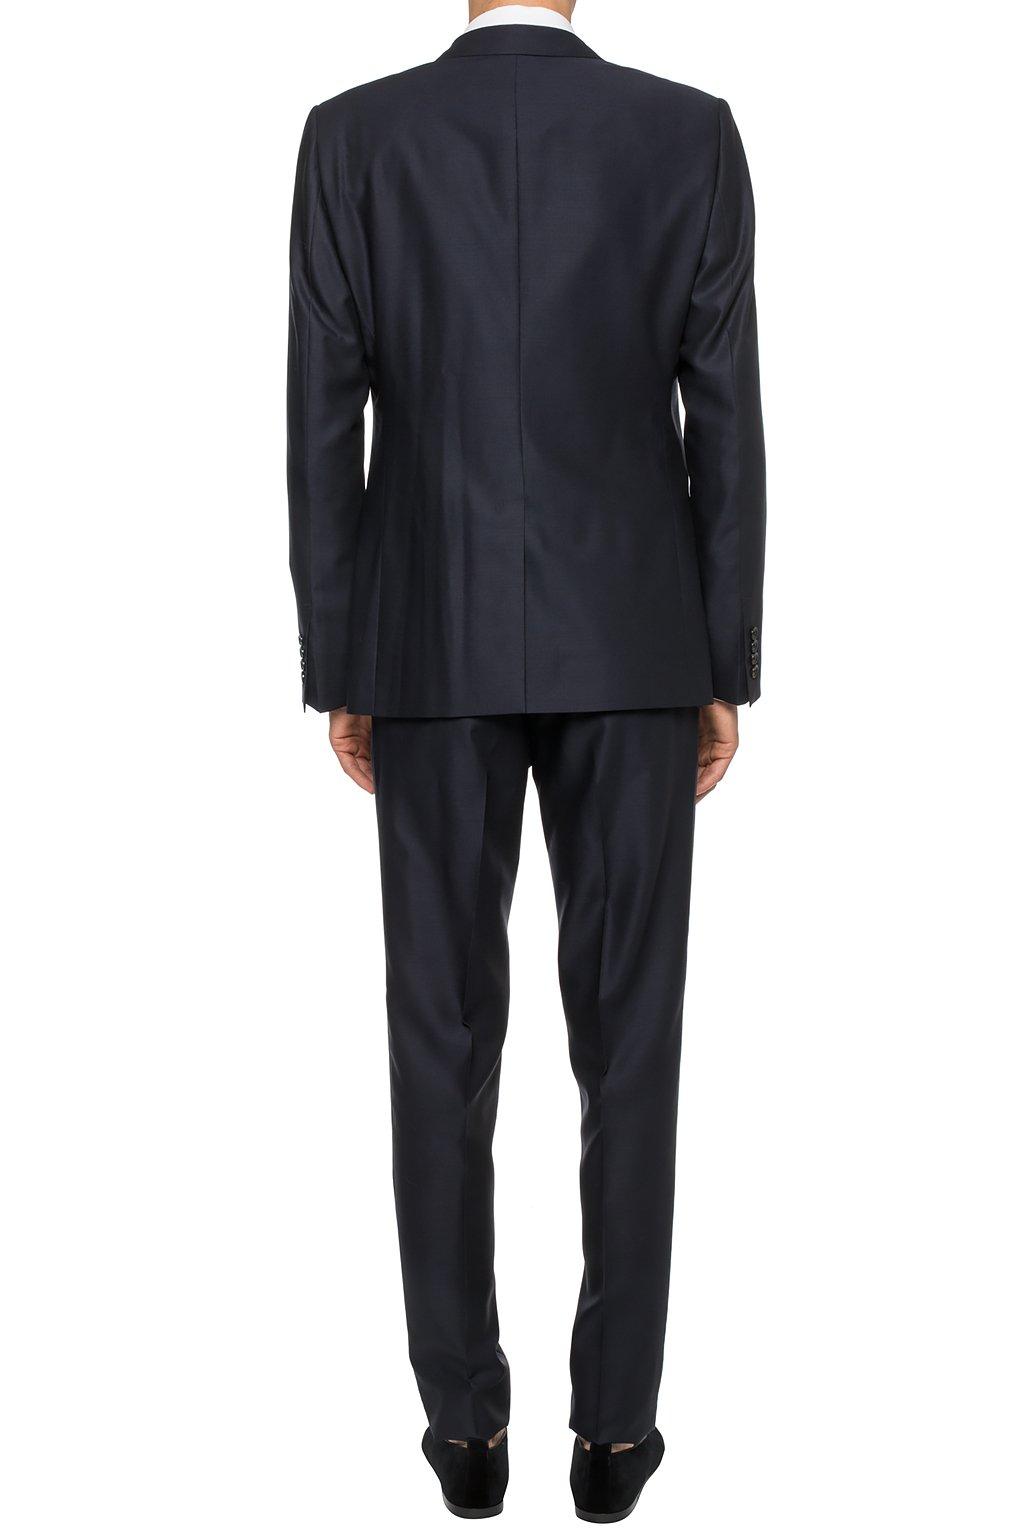 Dolce & Gabbana Wool Suit in Navy Blue (Blue) for Men - Lyst